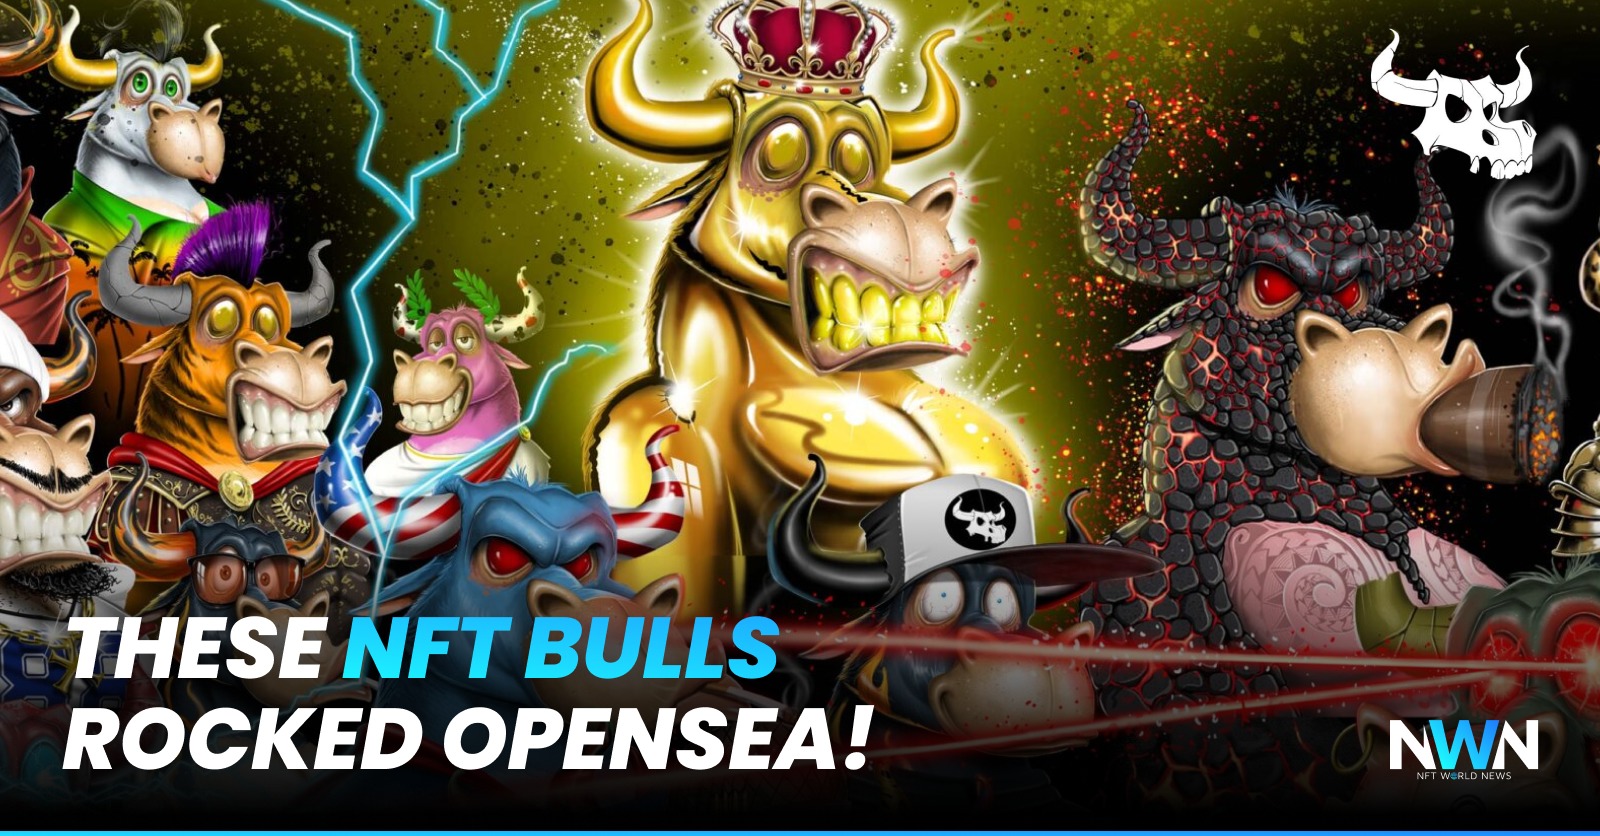 These NFT Bulls Rocked OpenSea!